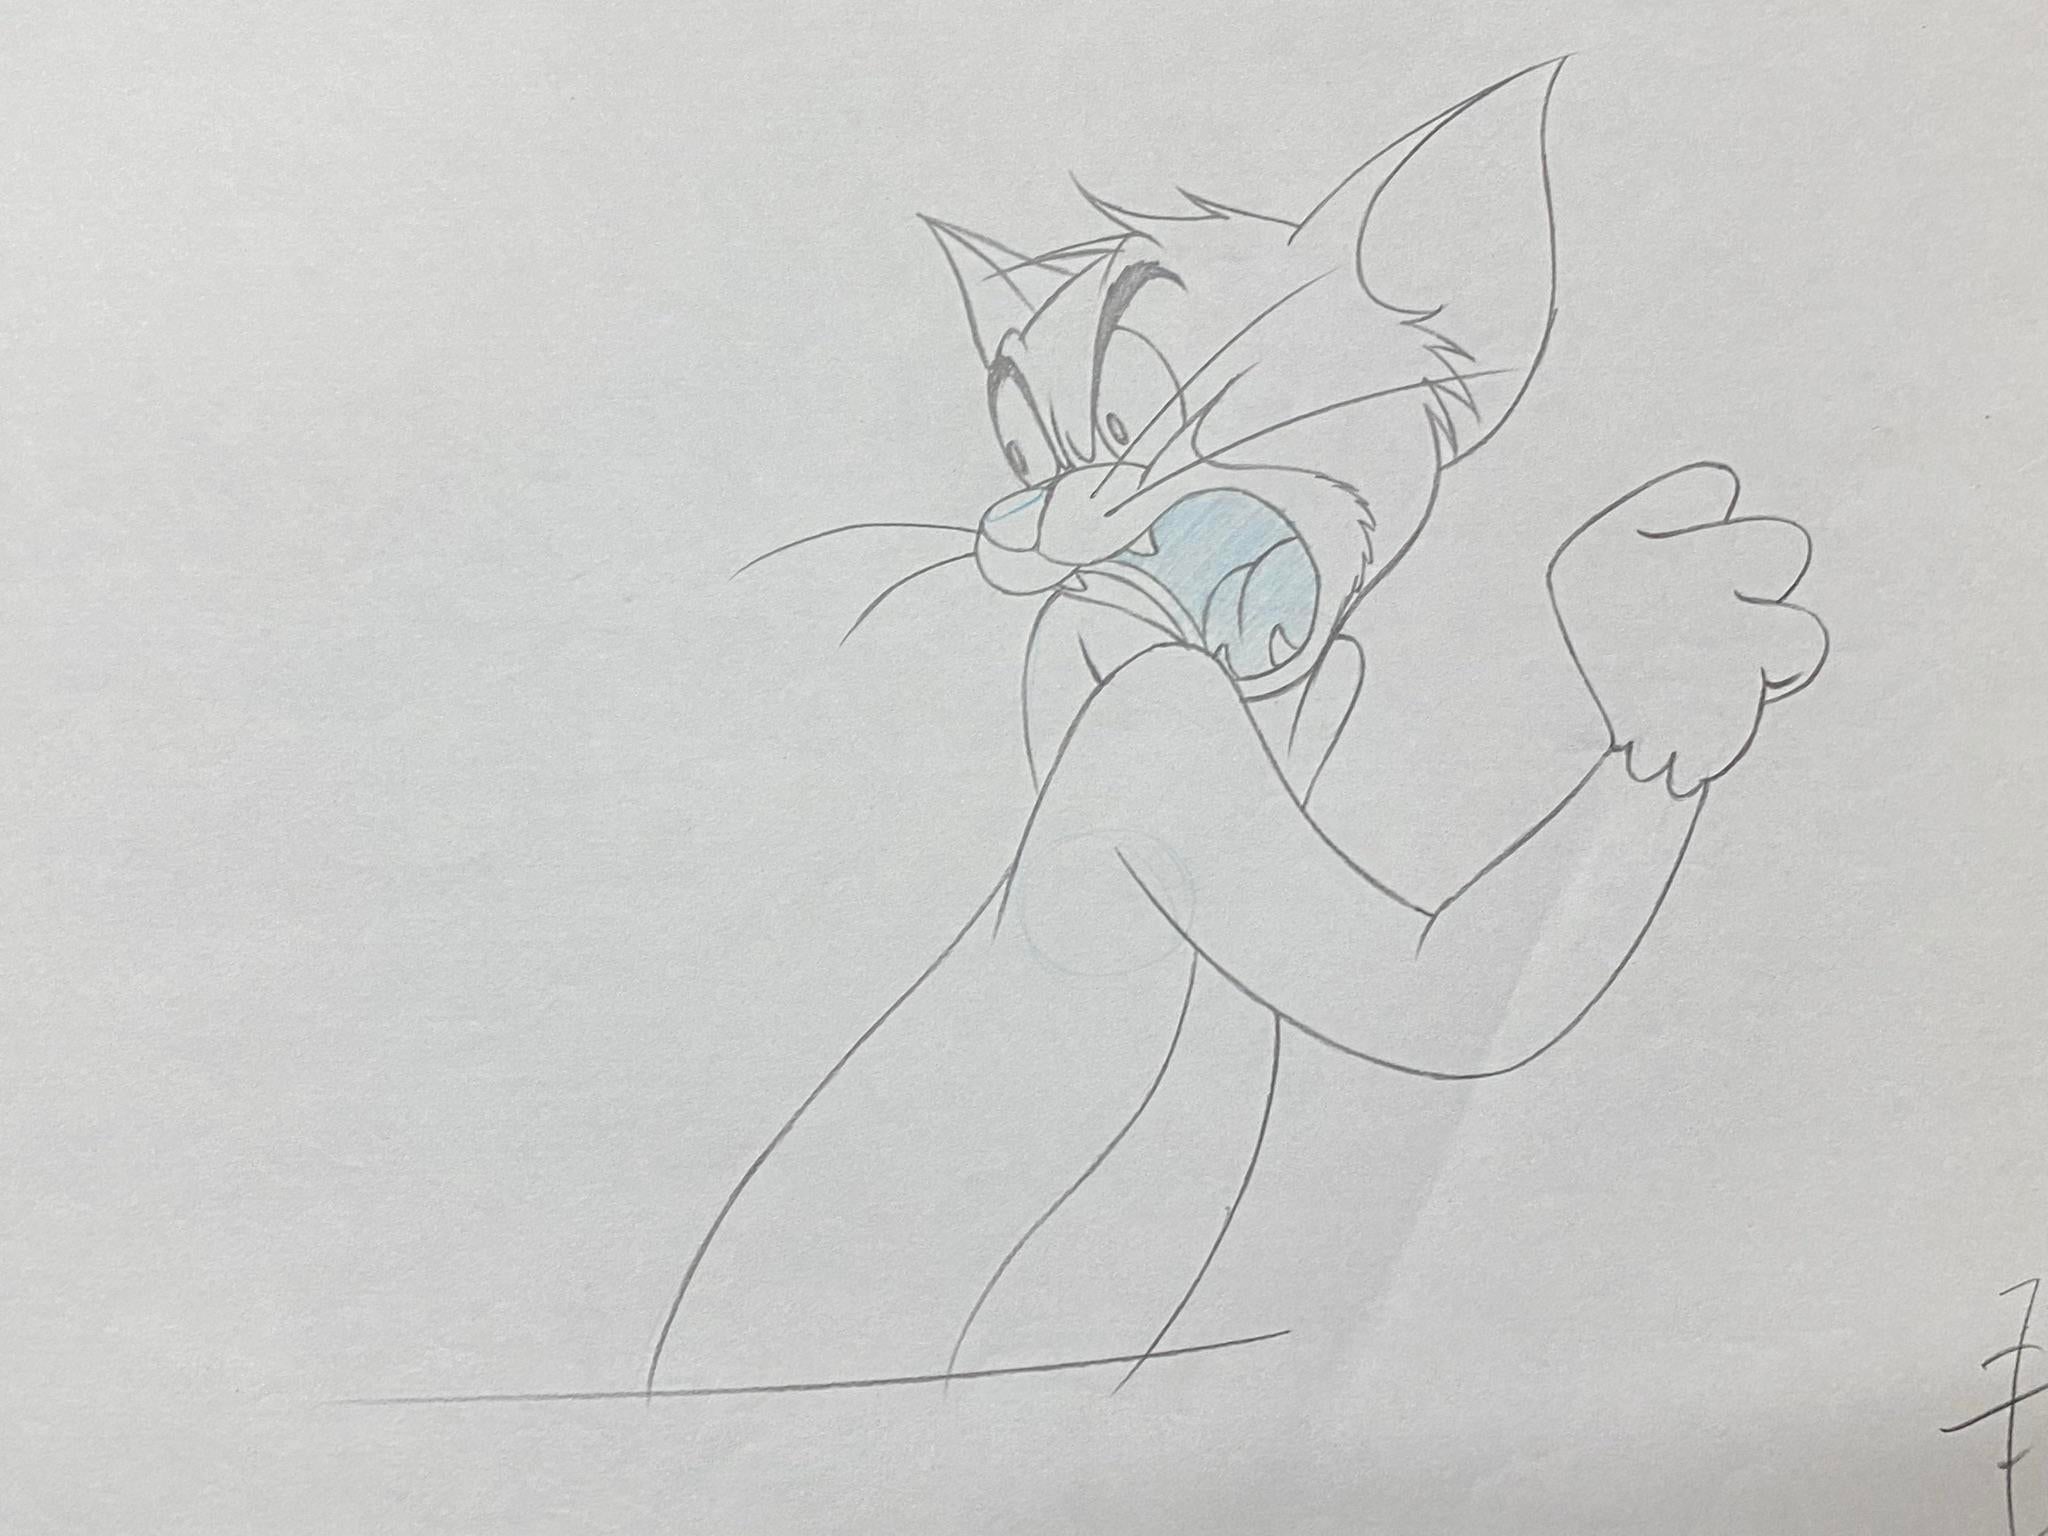 Let's Hit Notes - Tom & Jerry 🐱🐹 - Sketch and Pencil shading Art  #tomandjerry #cutedrawings #miffysartzone #Tom #jerry #sketchart #sketch  #pencilshading #painting #drawing #drawingoftheday✏ #drawings #artwork #art  #letshitnotes #kawaiidrawing ...